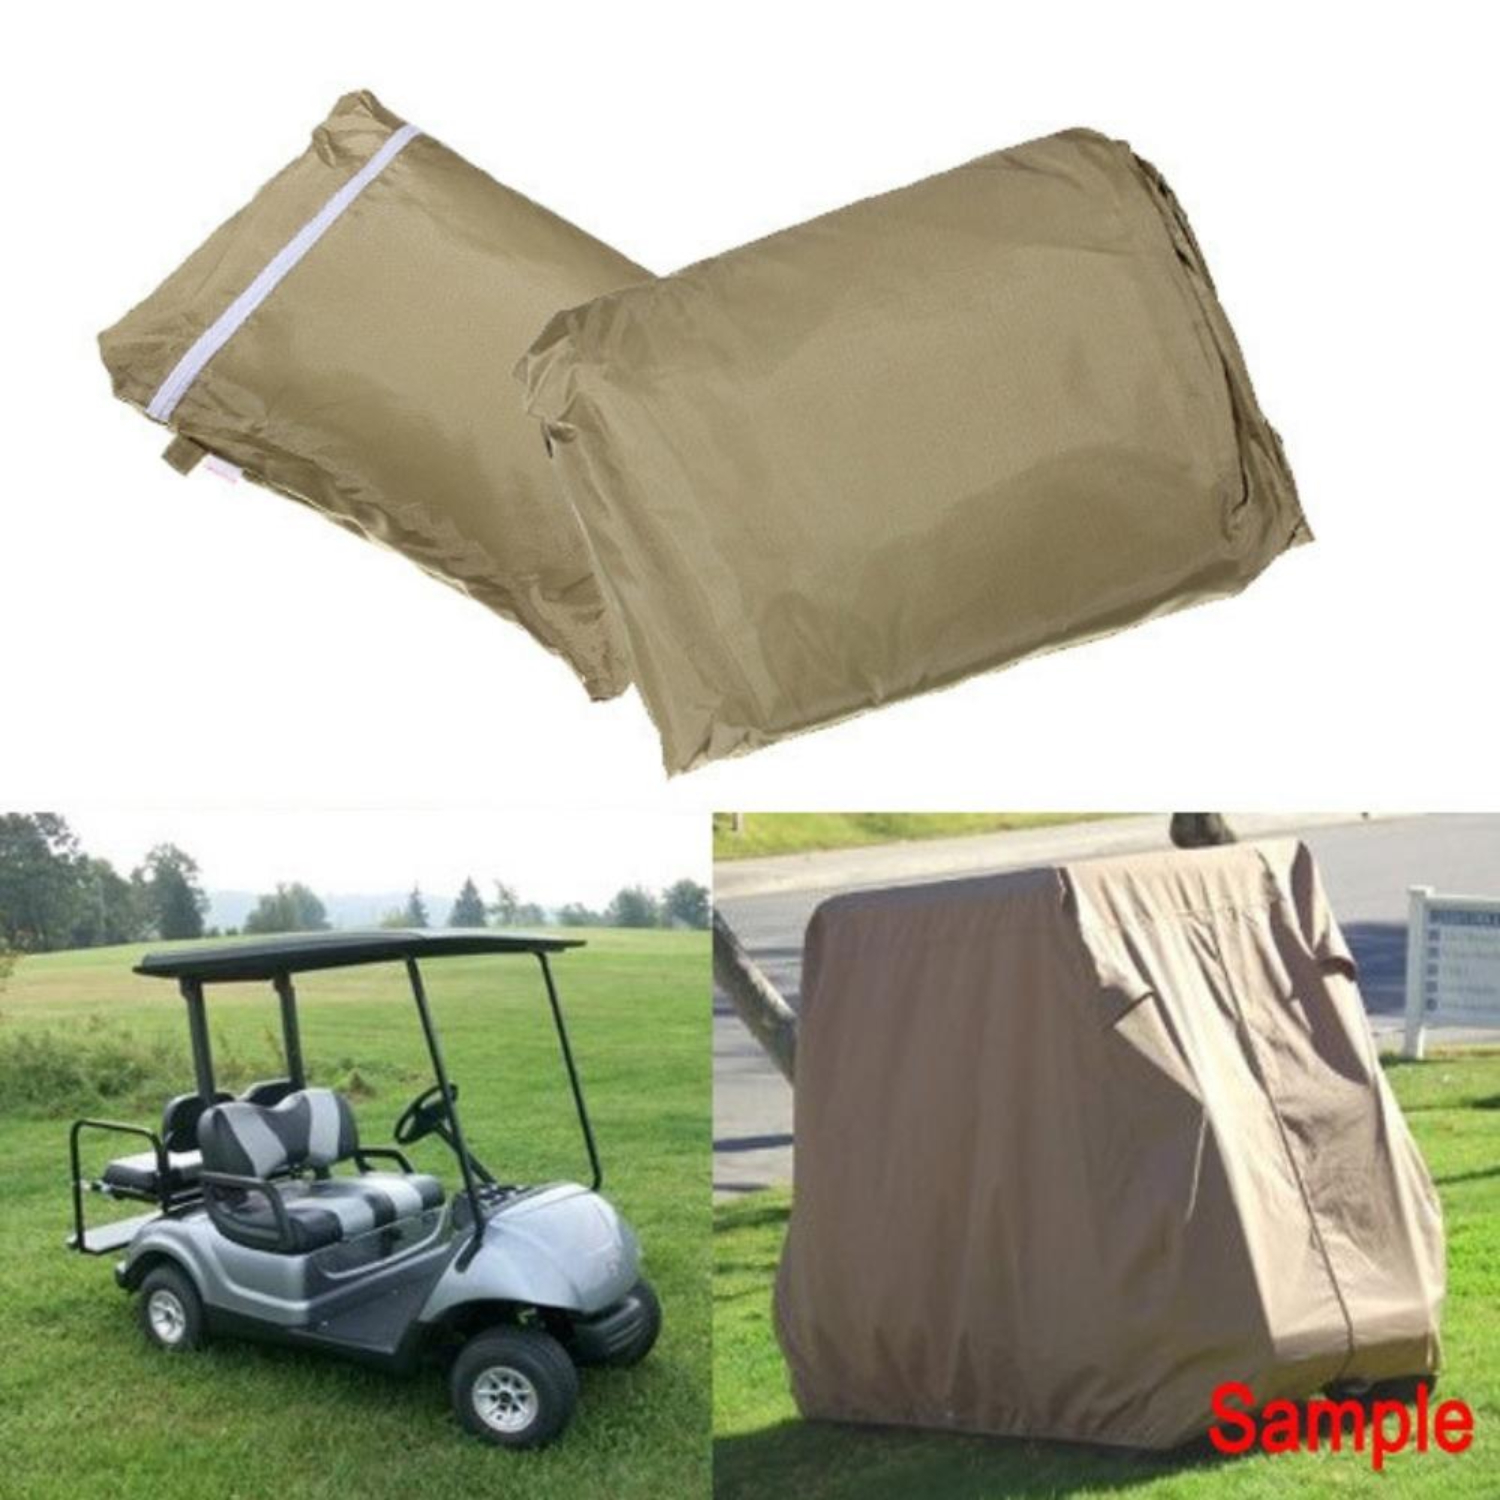 Club de golf de pasajeros Coche Cubierta impermeable a prueba de polvo Anti-UV Campana impermeable (ESG20605)